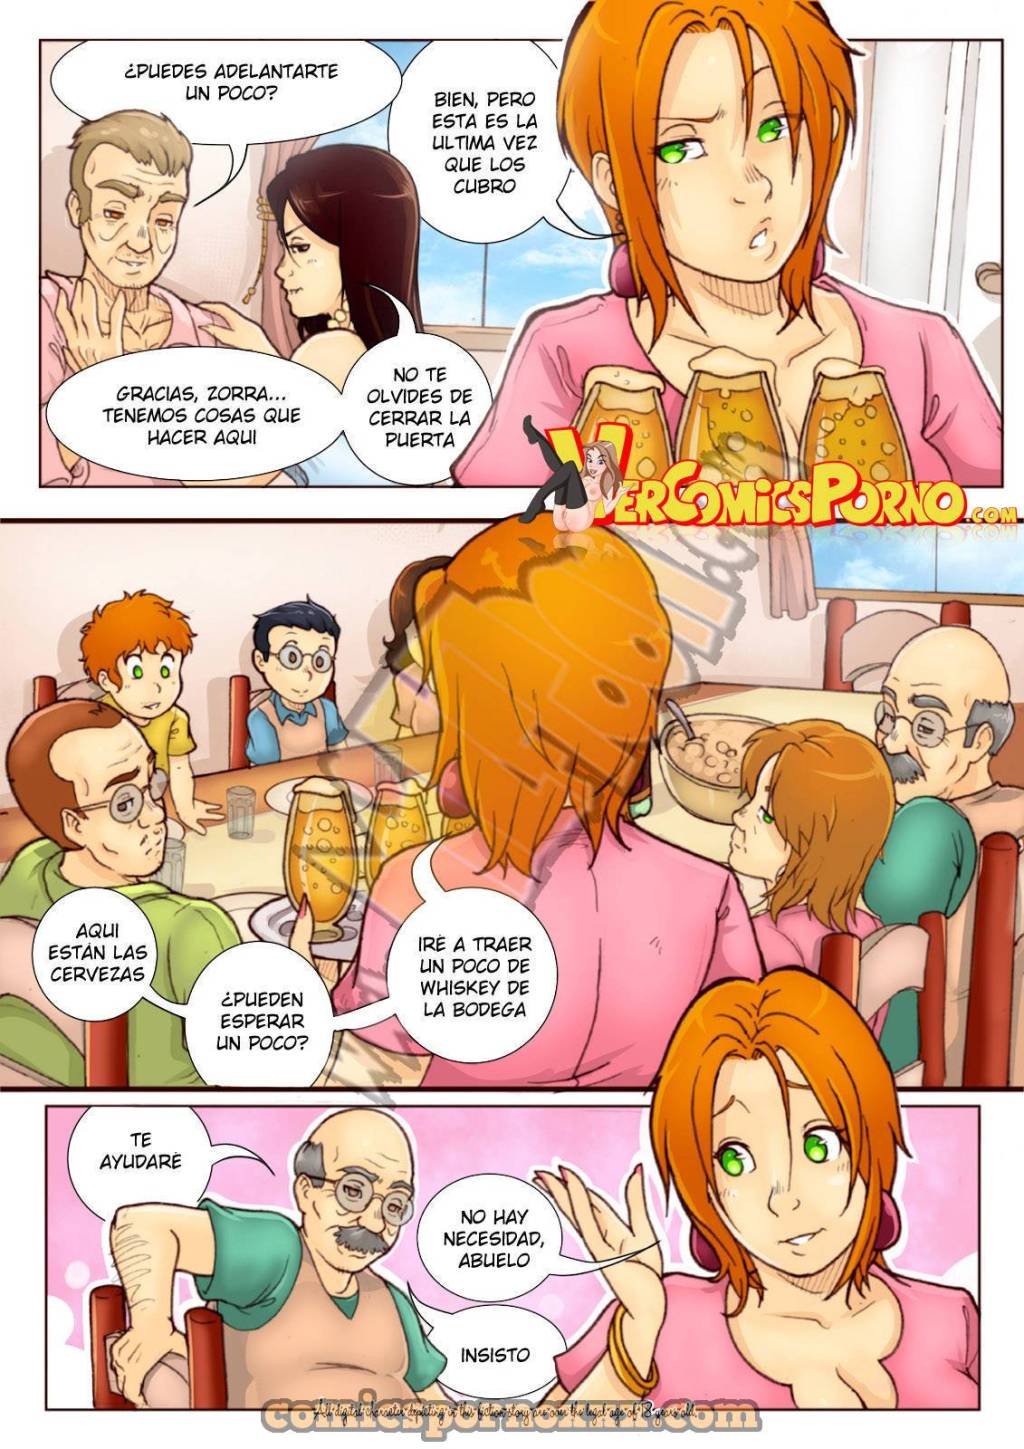 Not More Bowling #2 - 5 - Comics Porno - Hentai Manga - Cartoon XXX